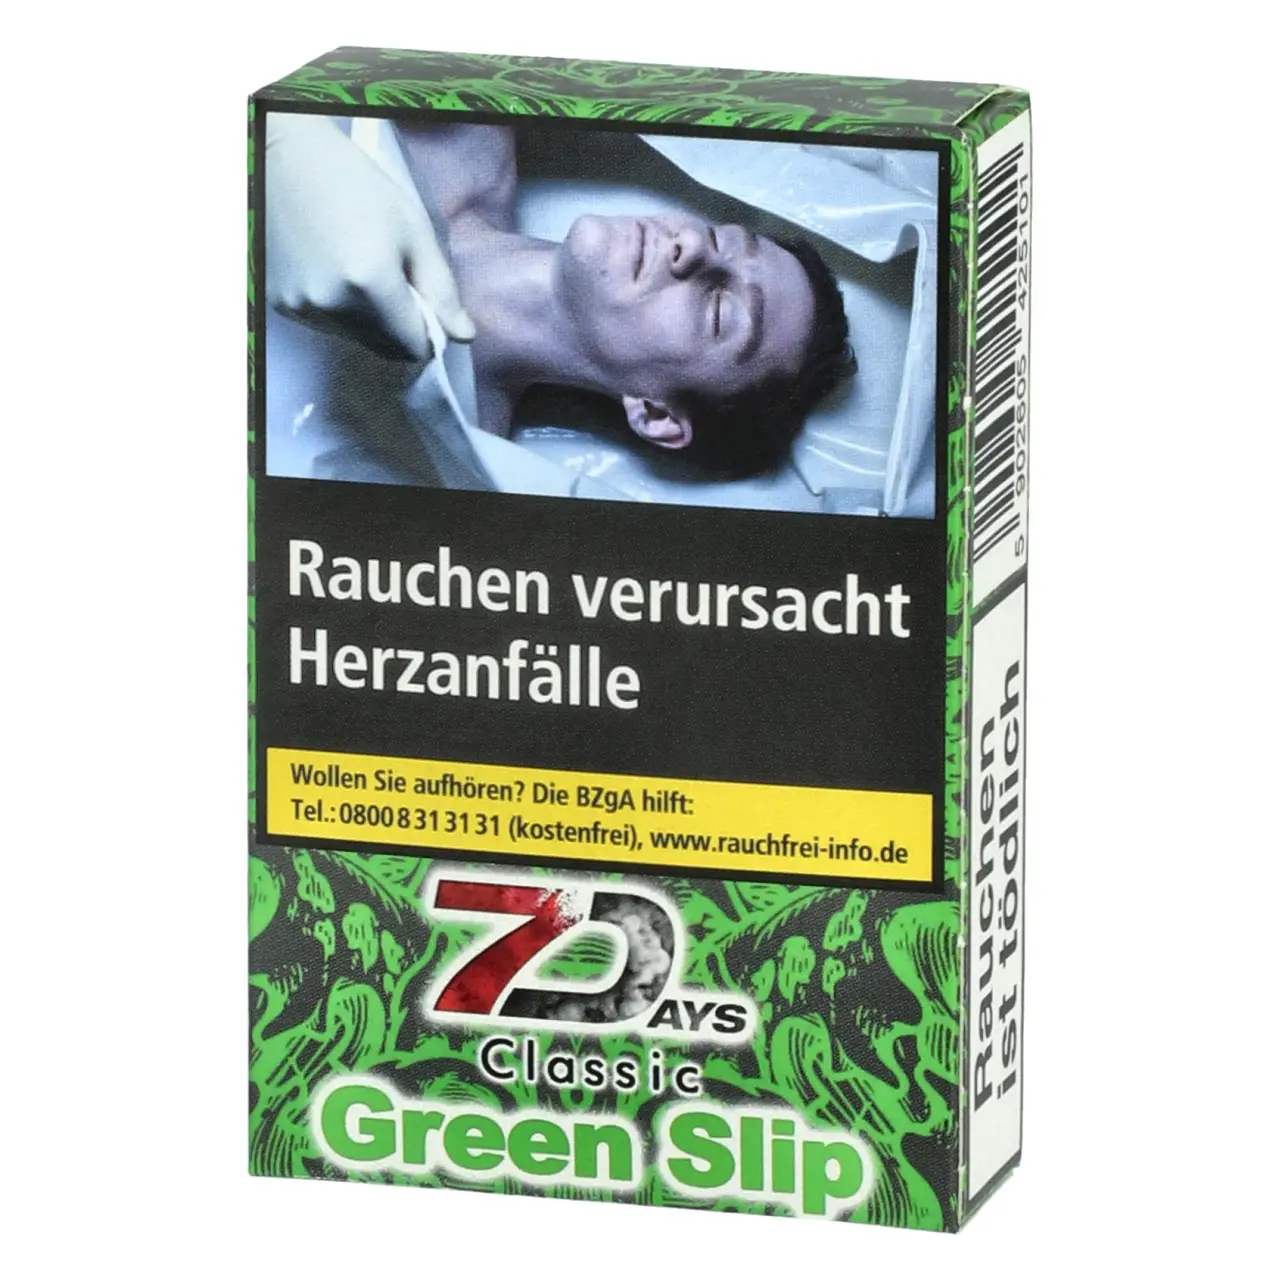 7 Days Classic Shisha Tabak Green Slip - Minze - 25g